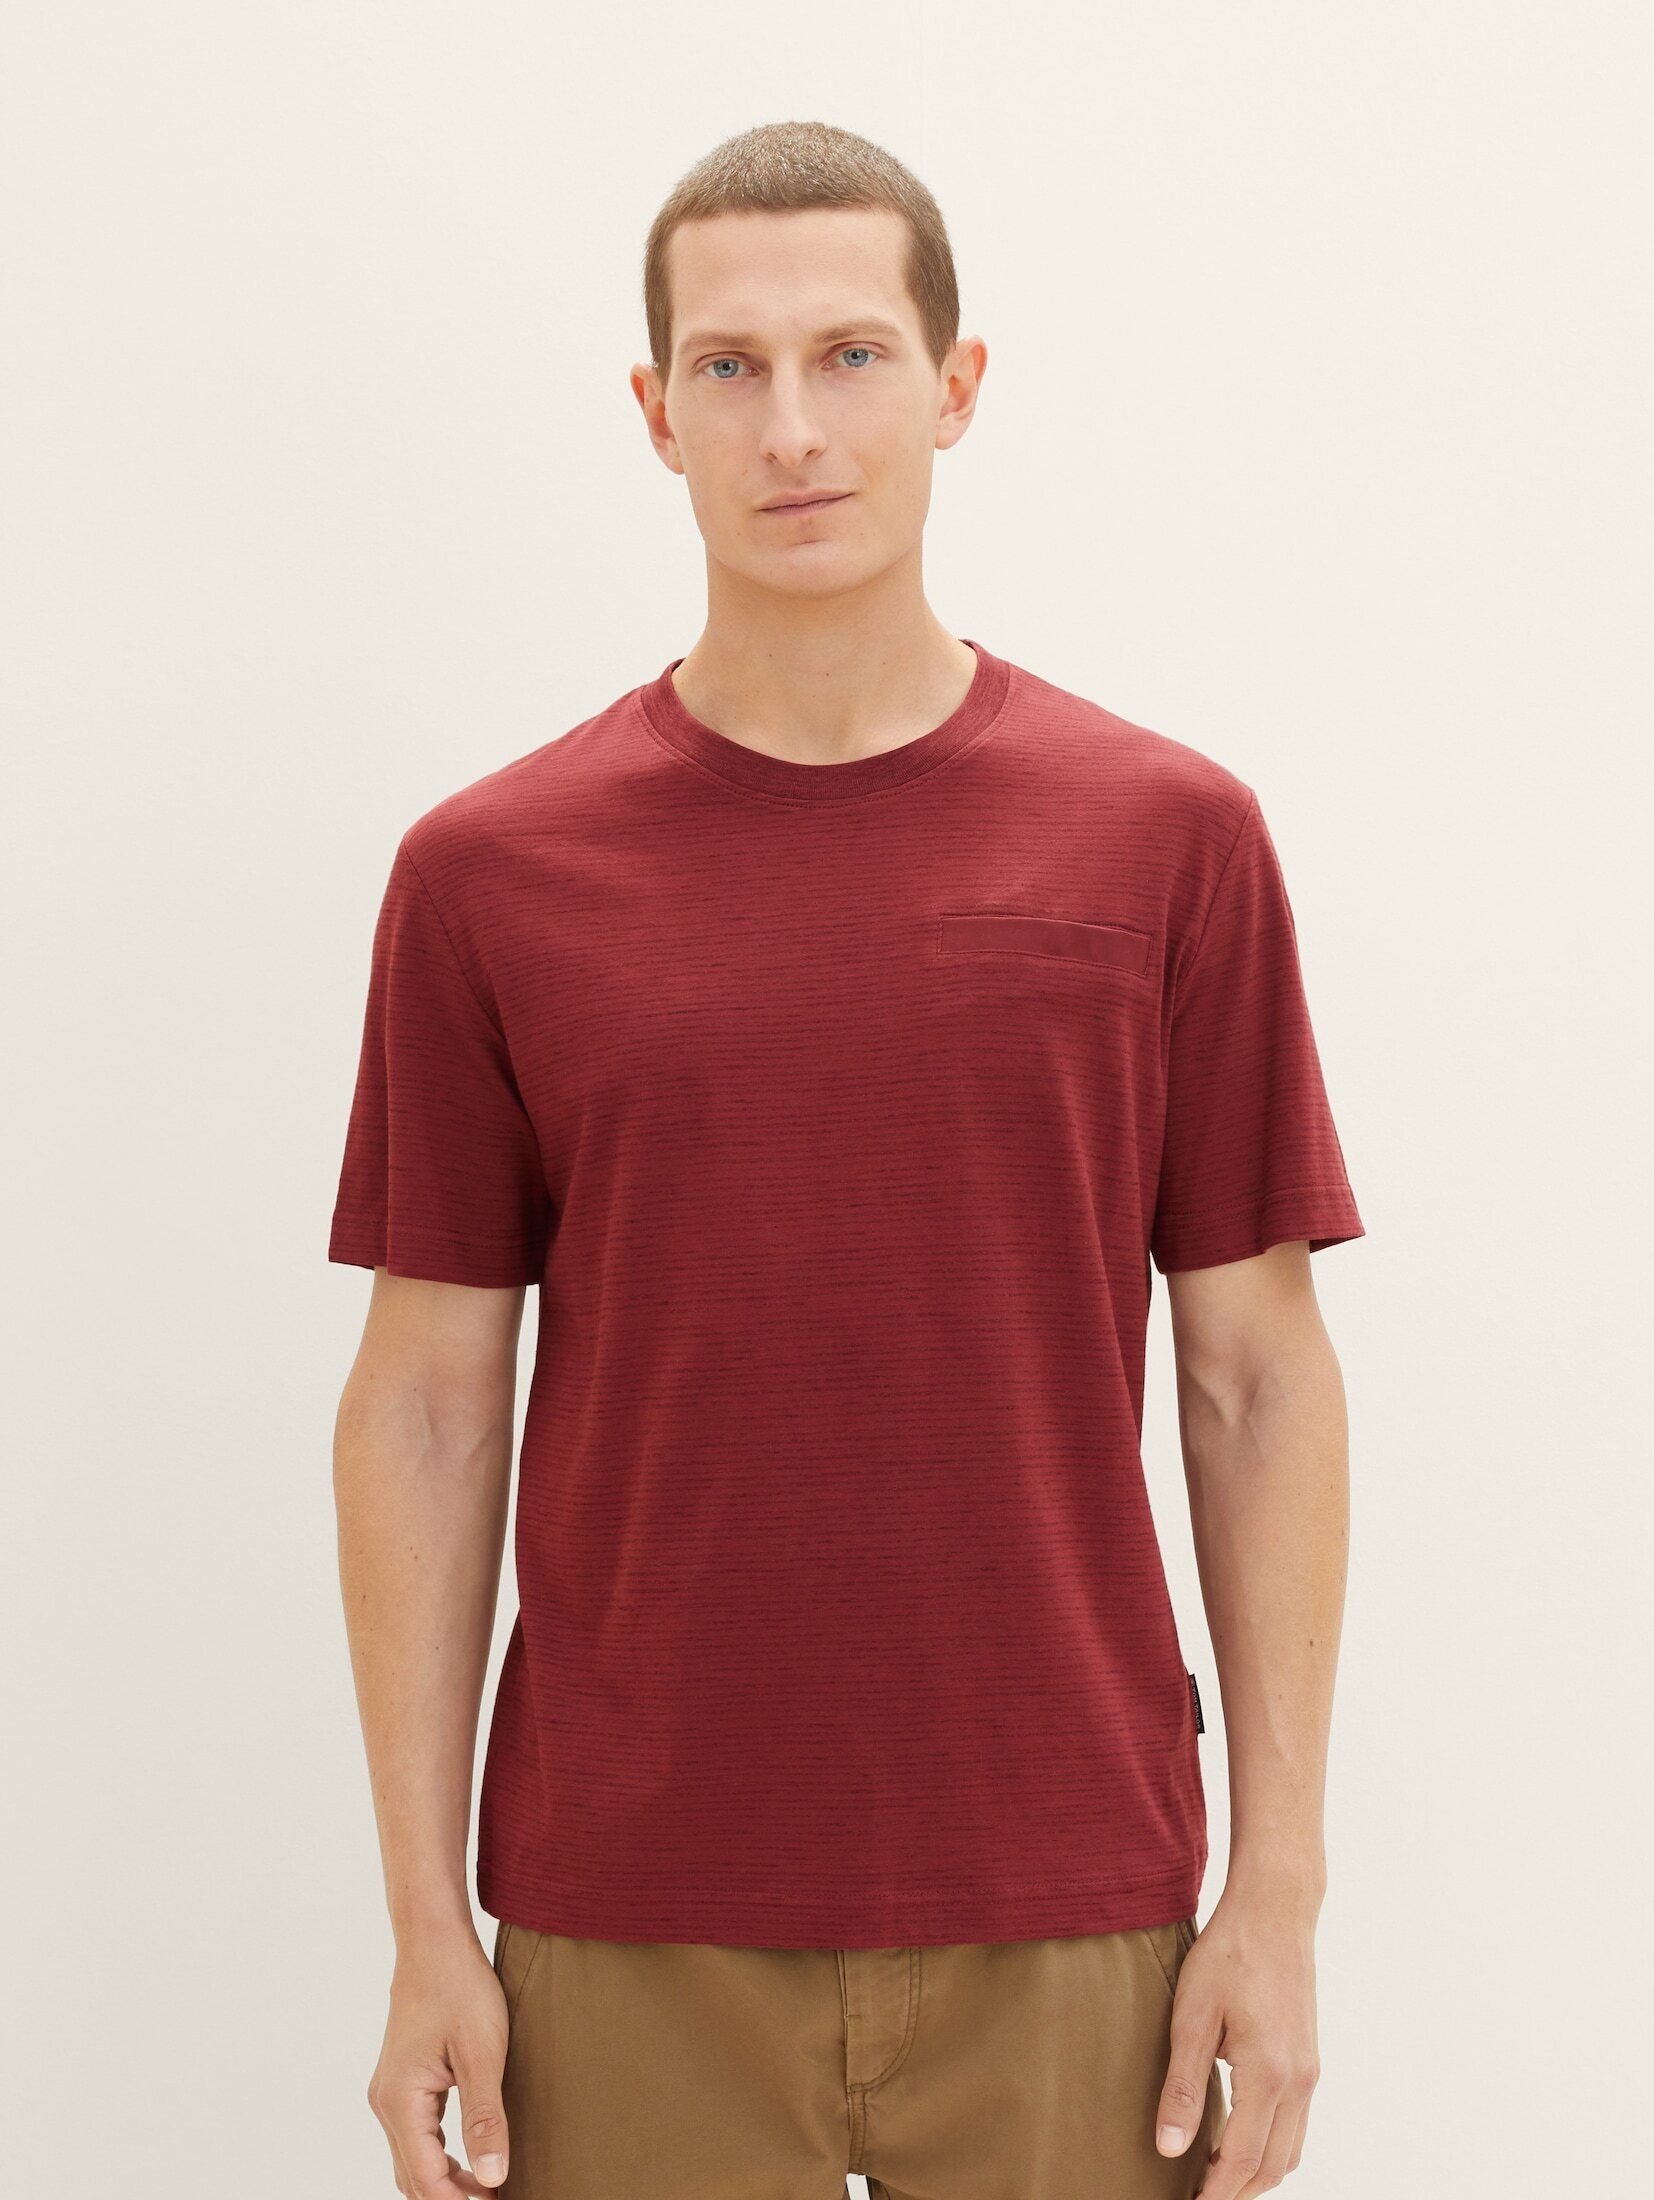 TOM TAILOR T-Shirt Strukturiertes T-Shirt bordeaux red stripy inject